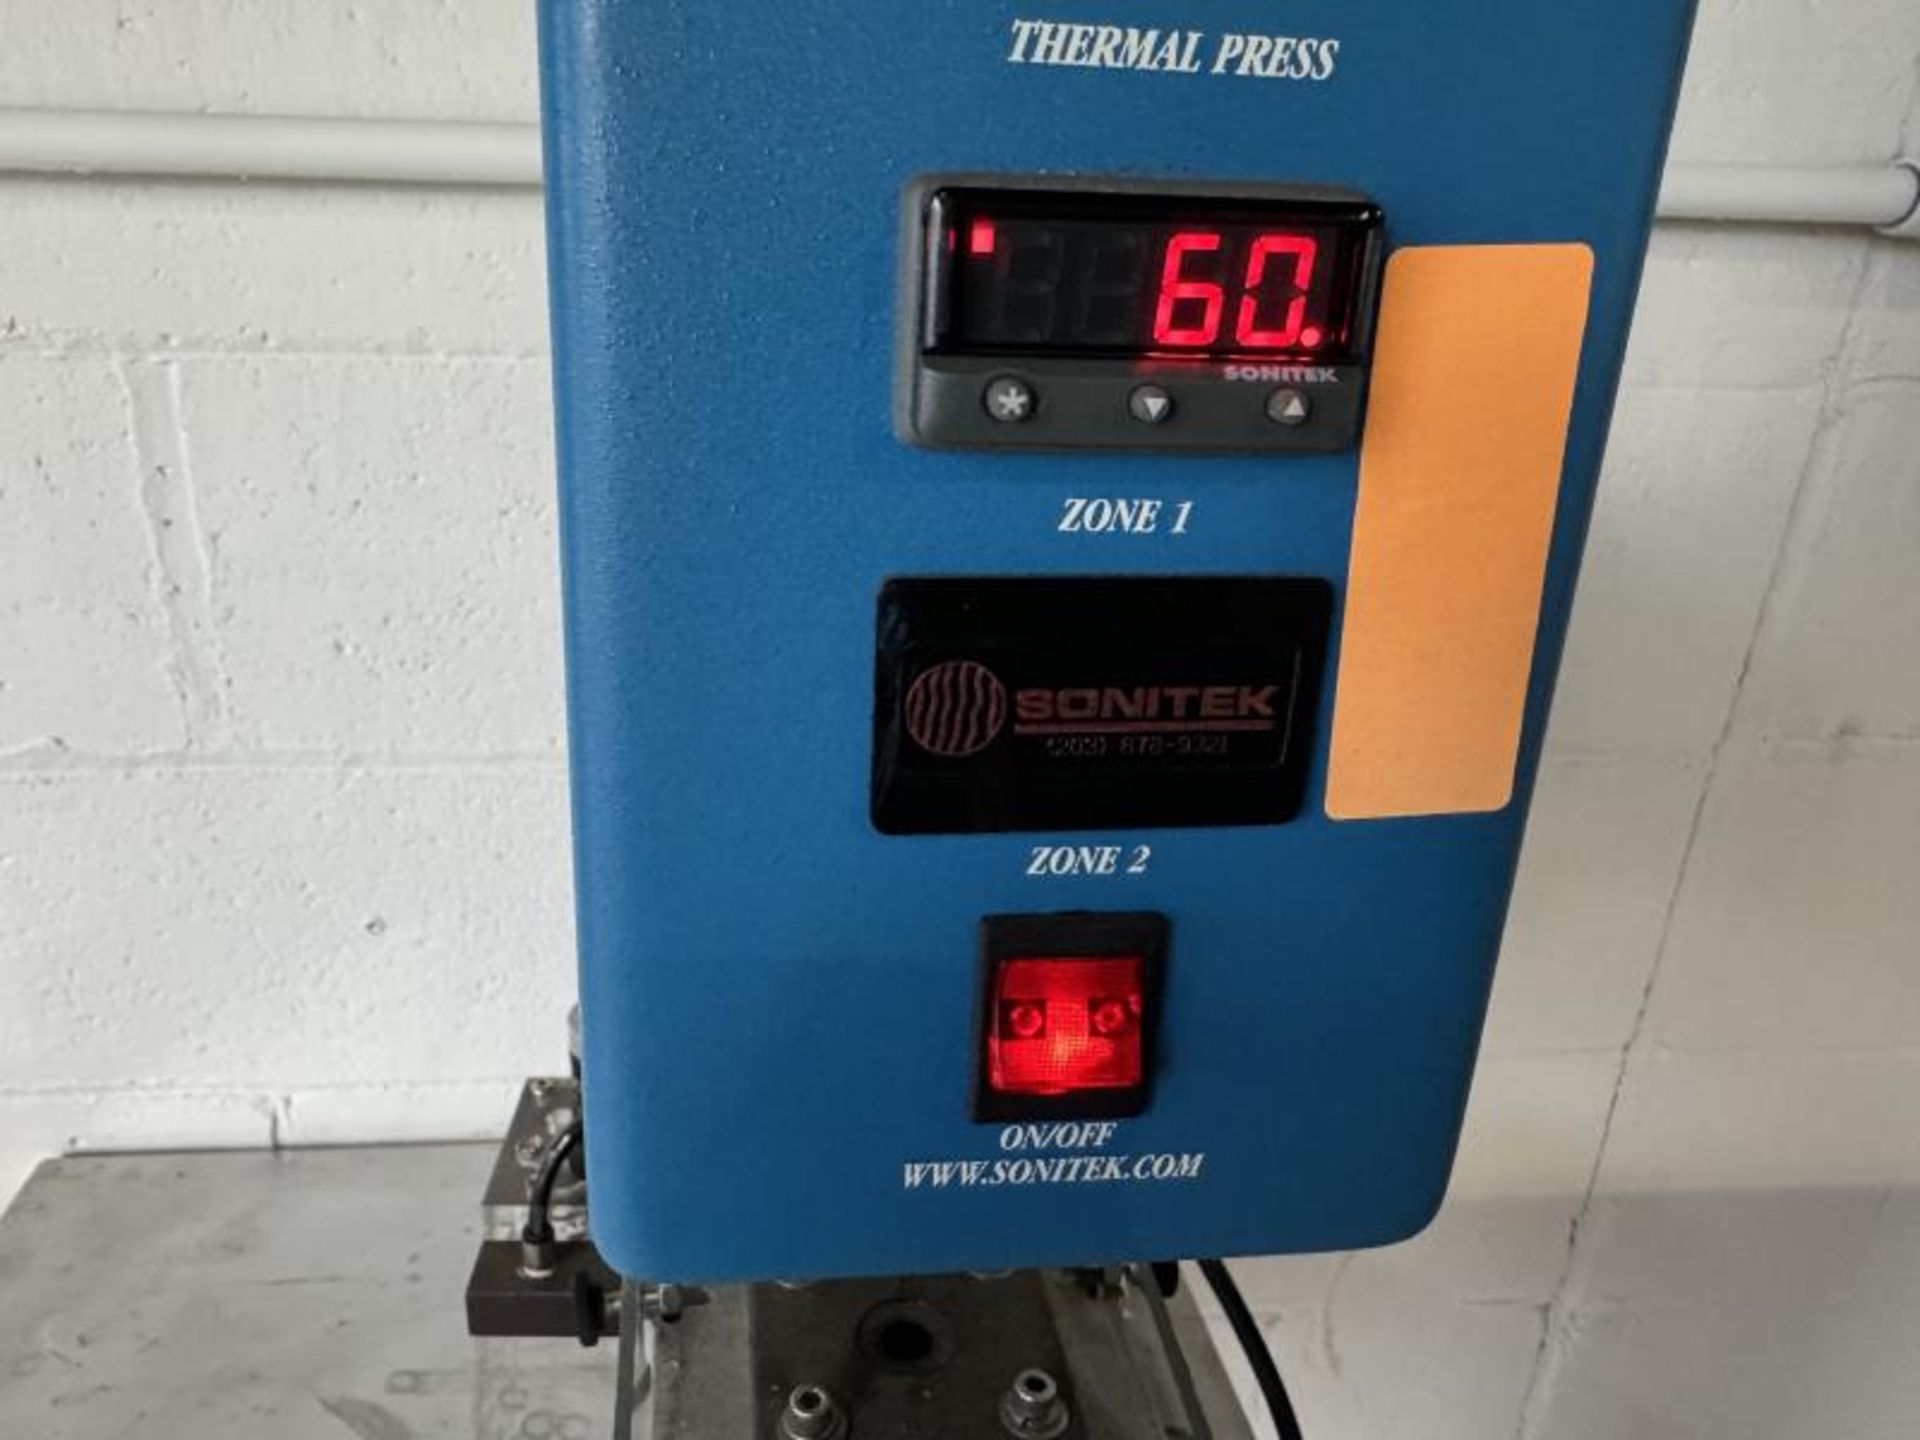 Sonitek Thermal Press M: TS-101/1, SN: 100-0344 - Image 2 of 5